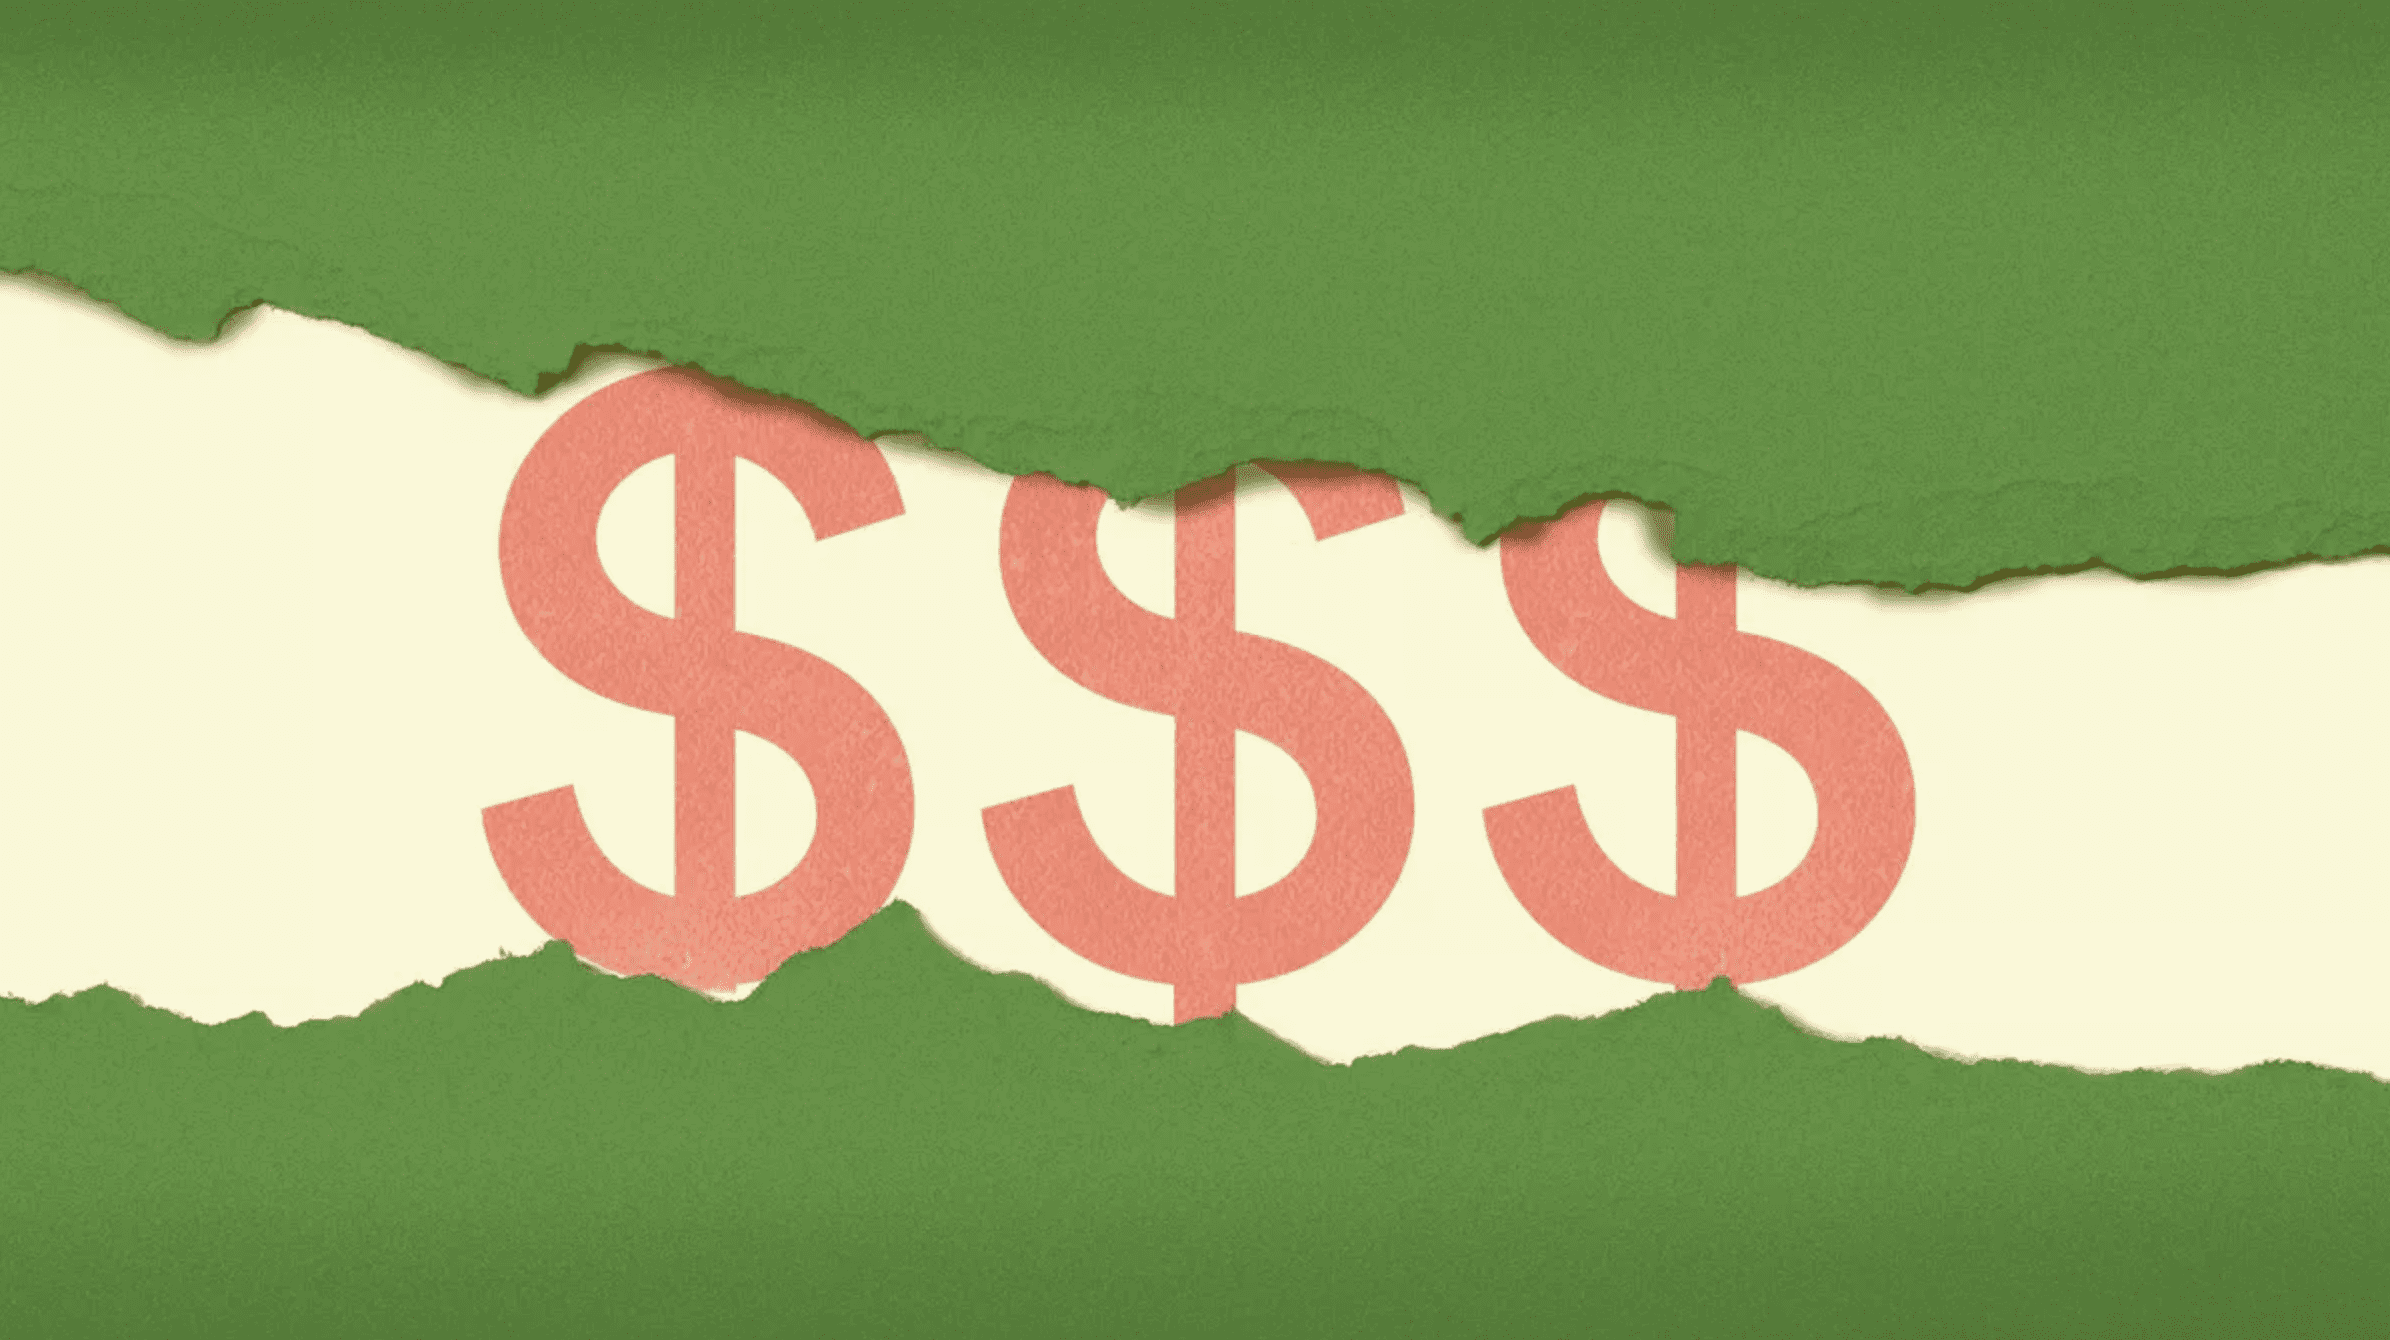 Dollar signs reveled beneath green paper